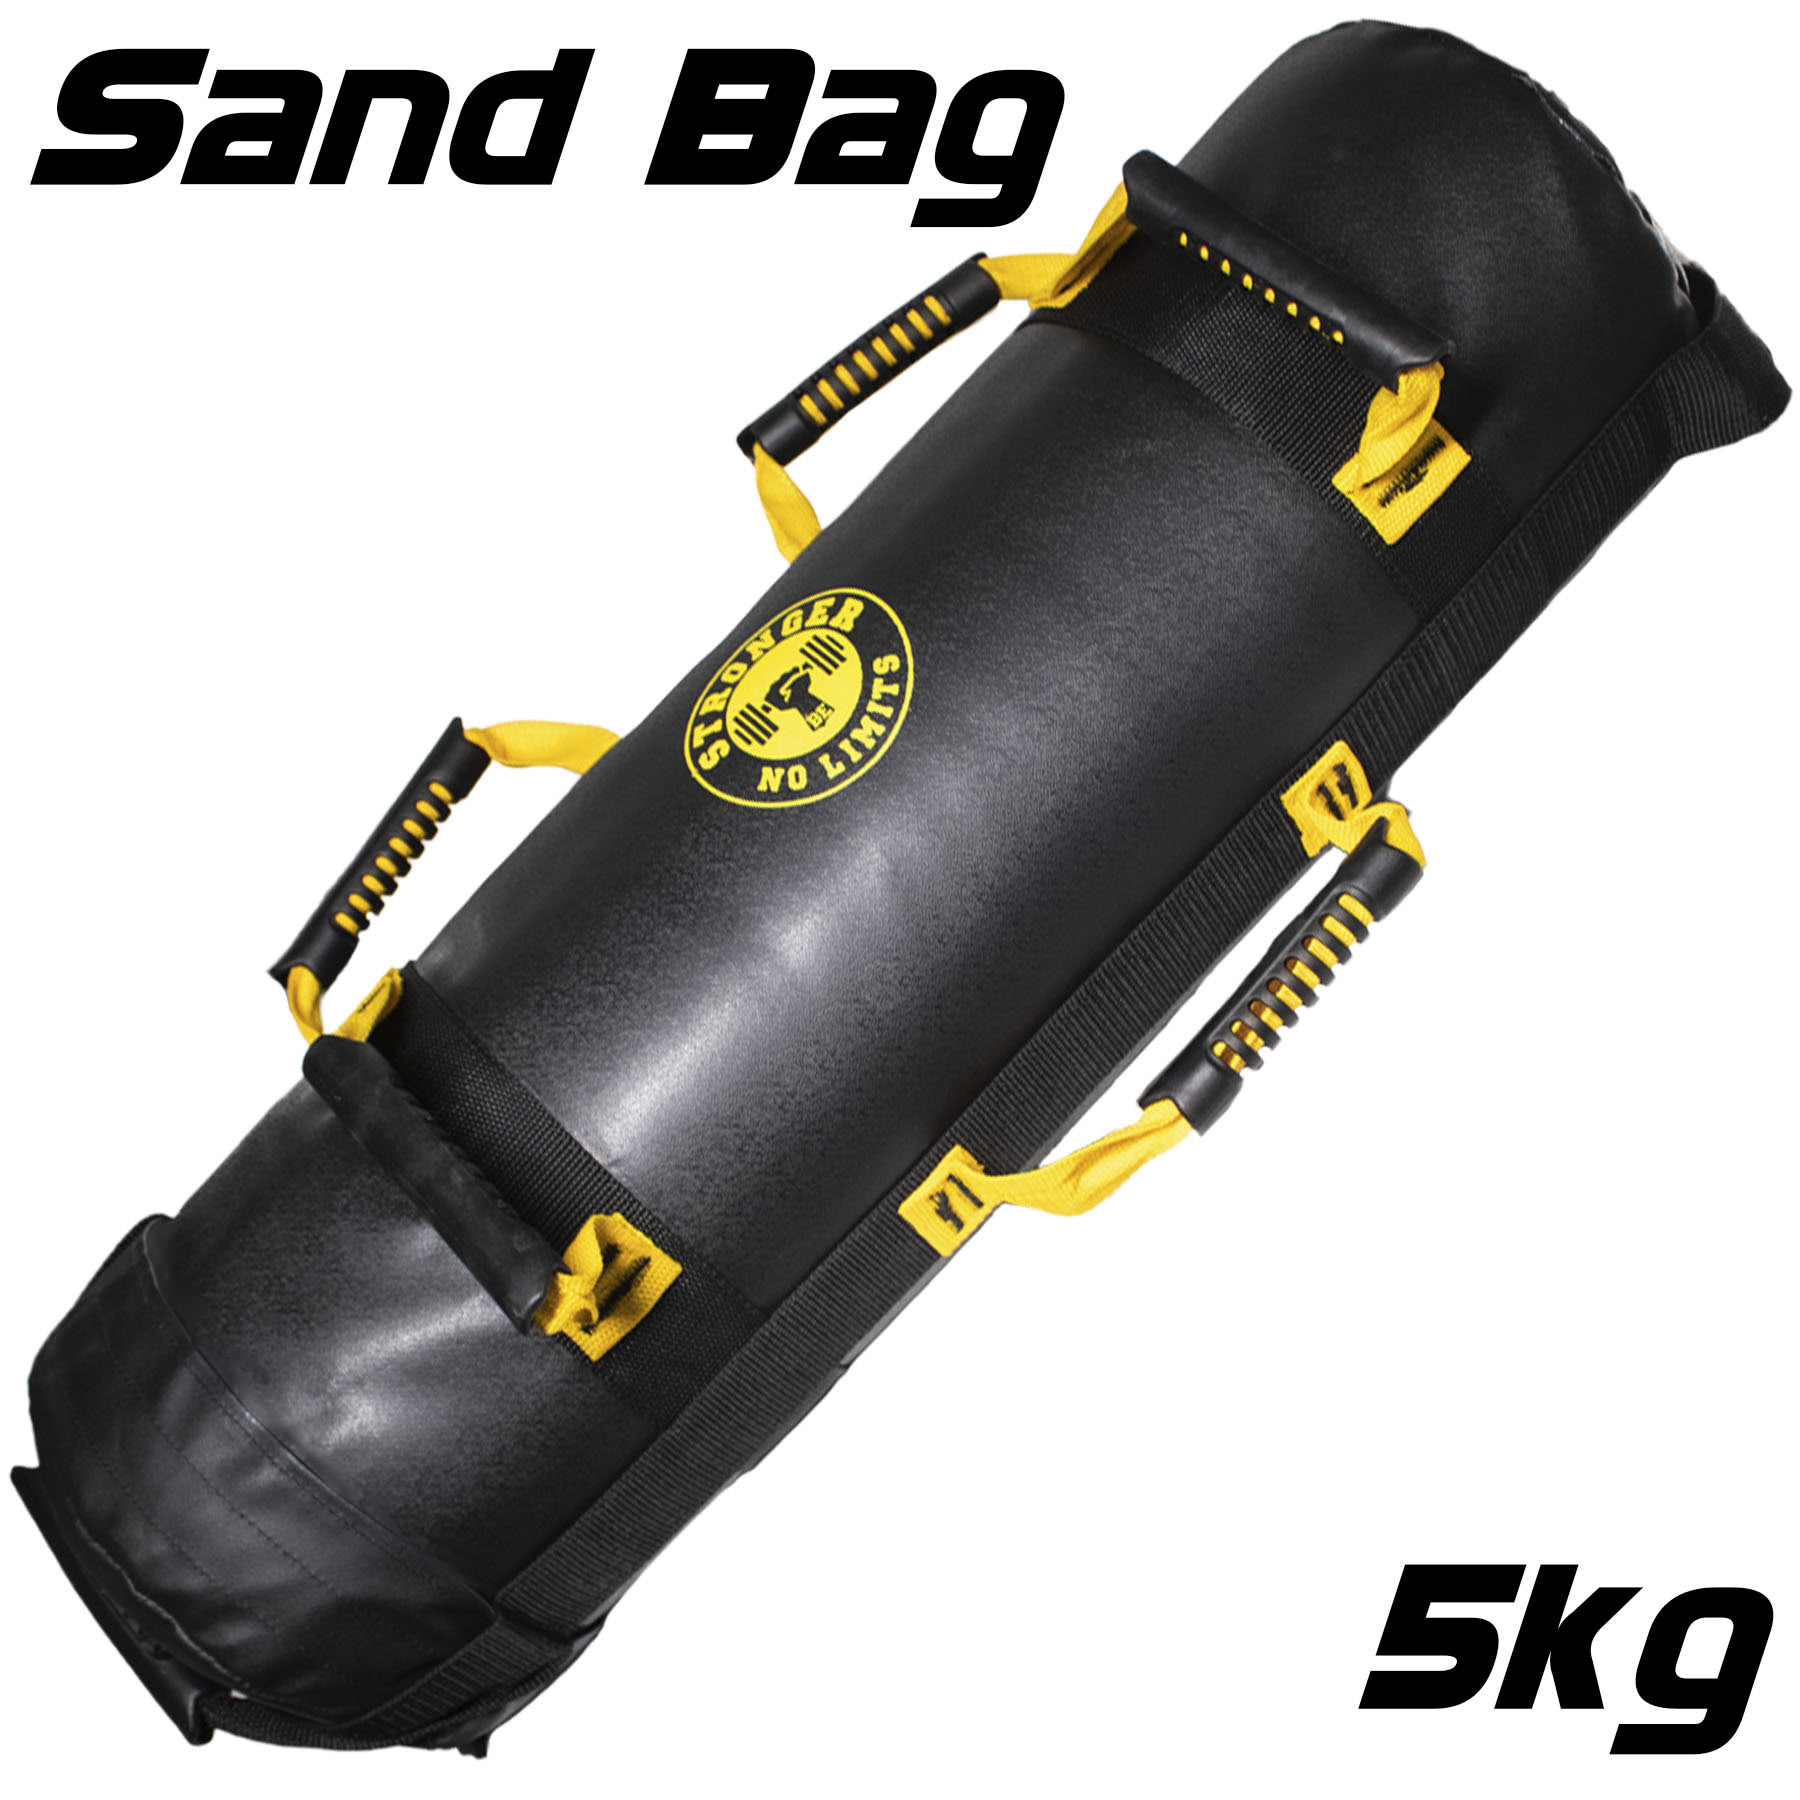 Sand Bag (Power Bag) Peso:5KG